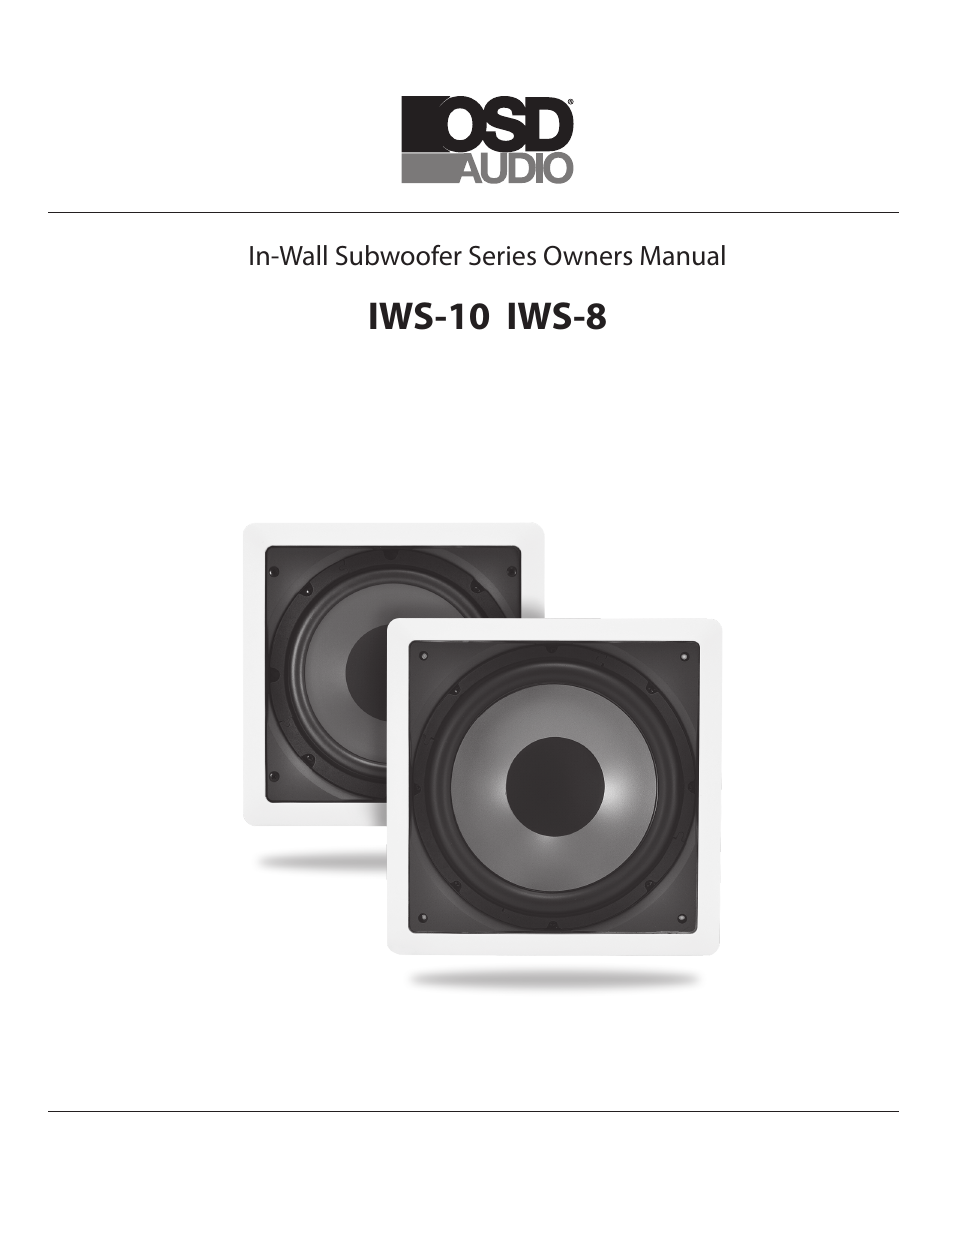 IWS-8